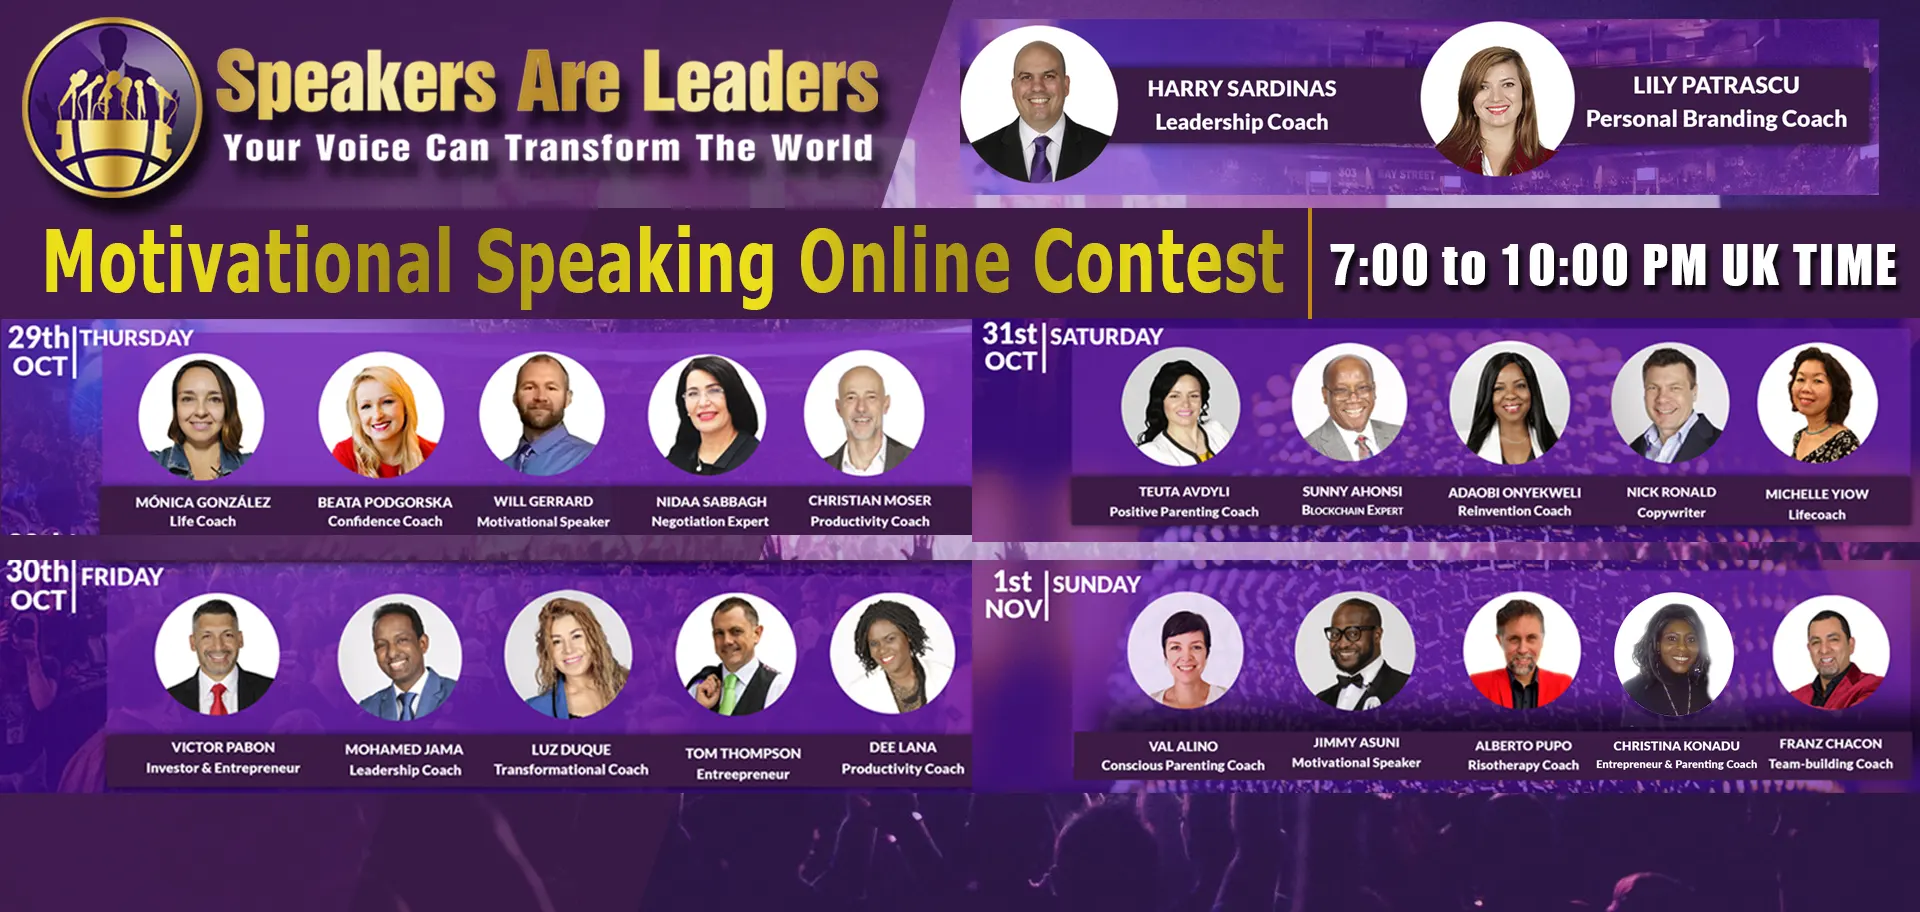 Speakers Are Leaders Motivational Speaking Online Contest